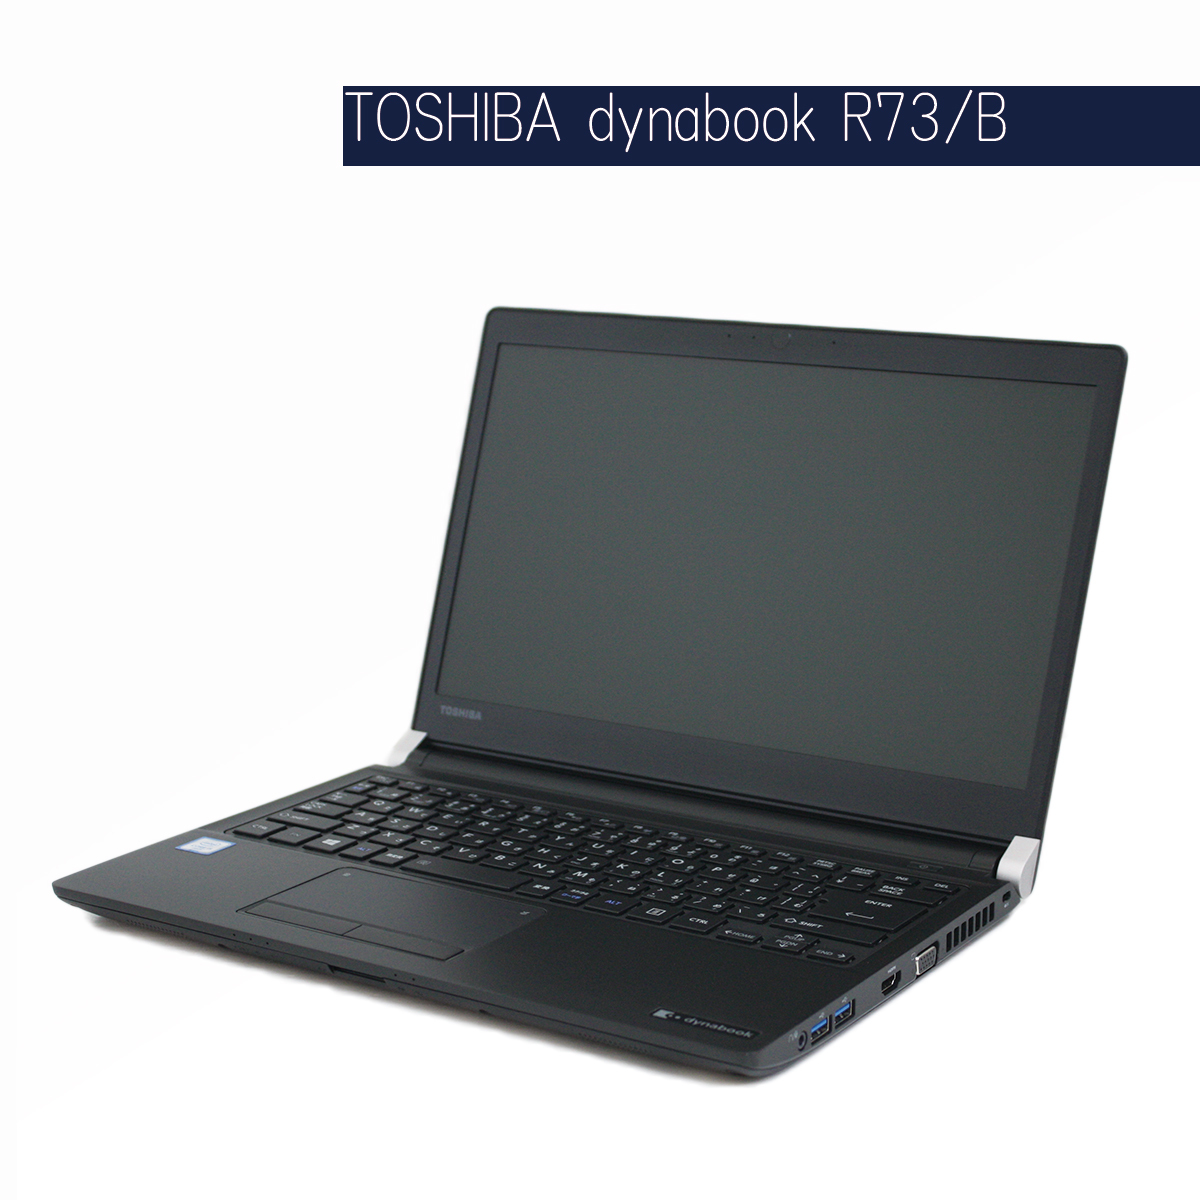 TOSHIBA dynabook R73/B Core i5 6300U 2.4GHz 4GB 500GB DVDマルチ 無線LAN Bluetooth Windows10 Pro 64Bit